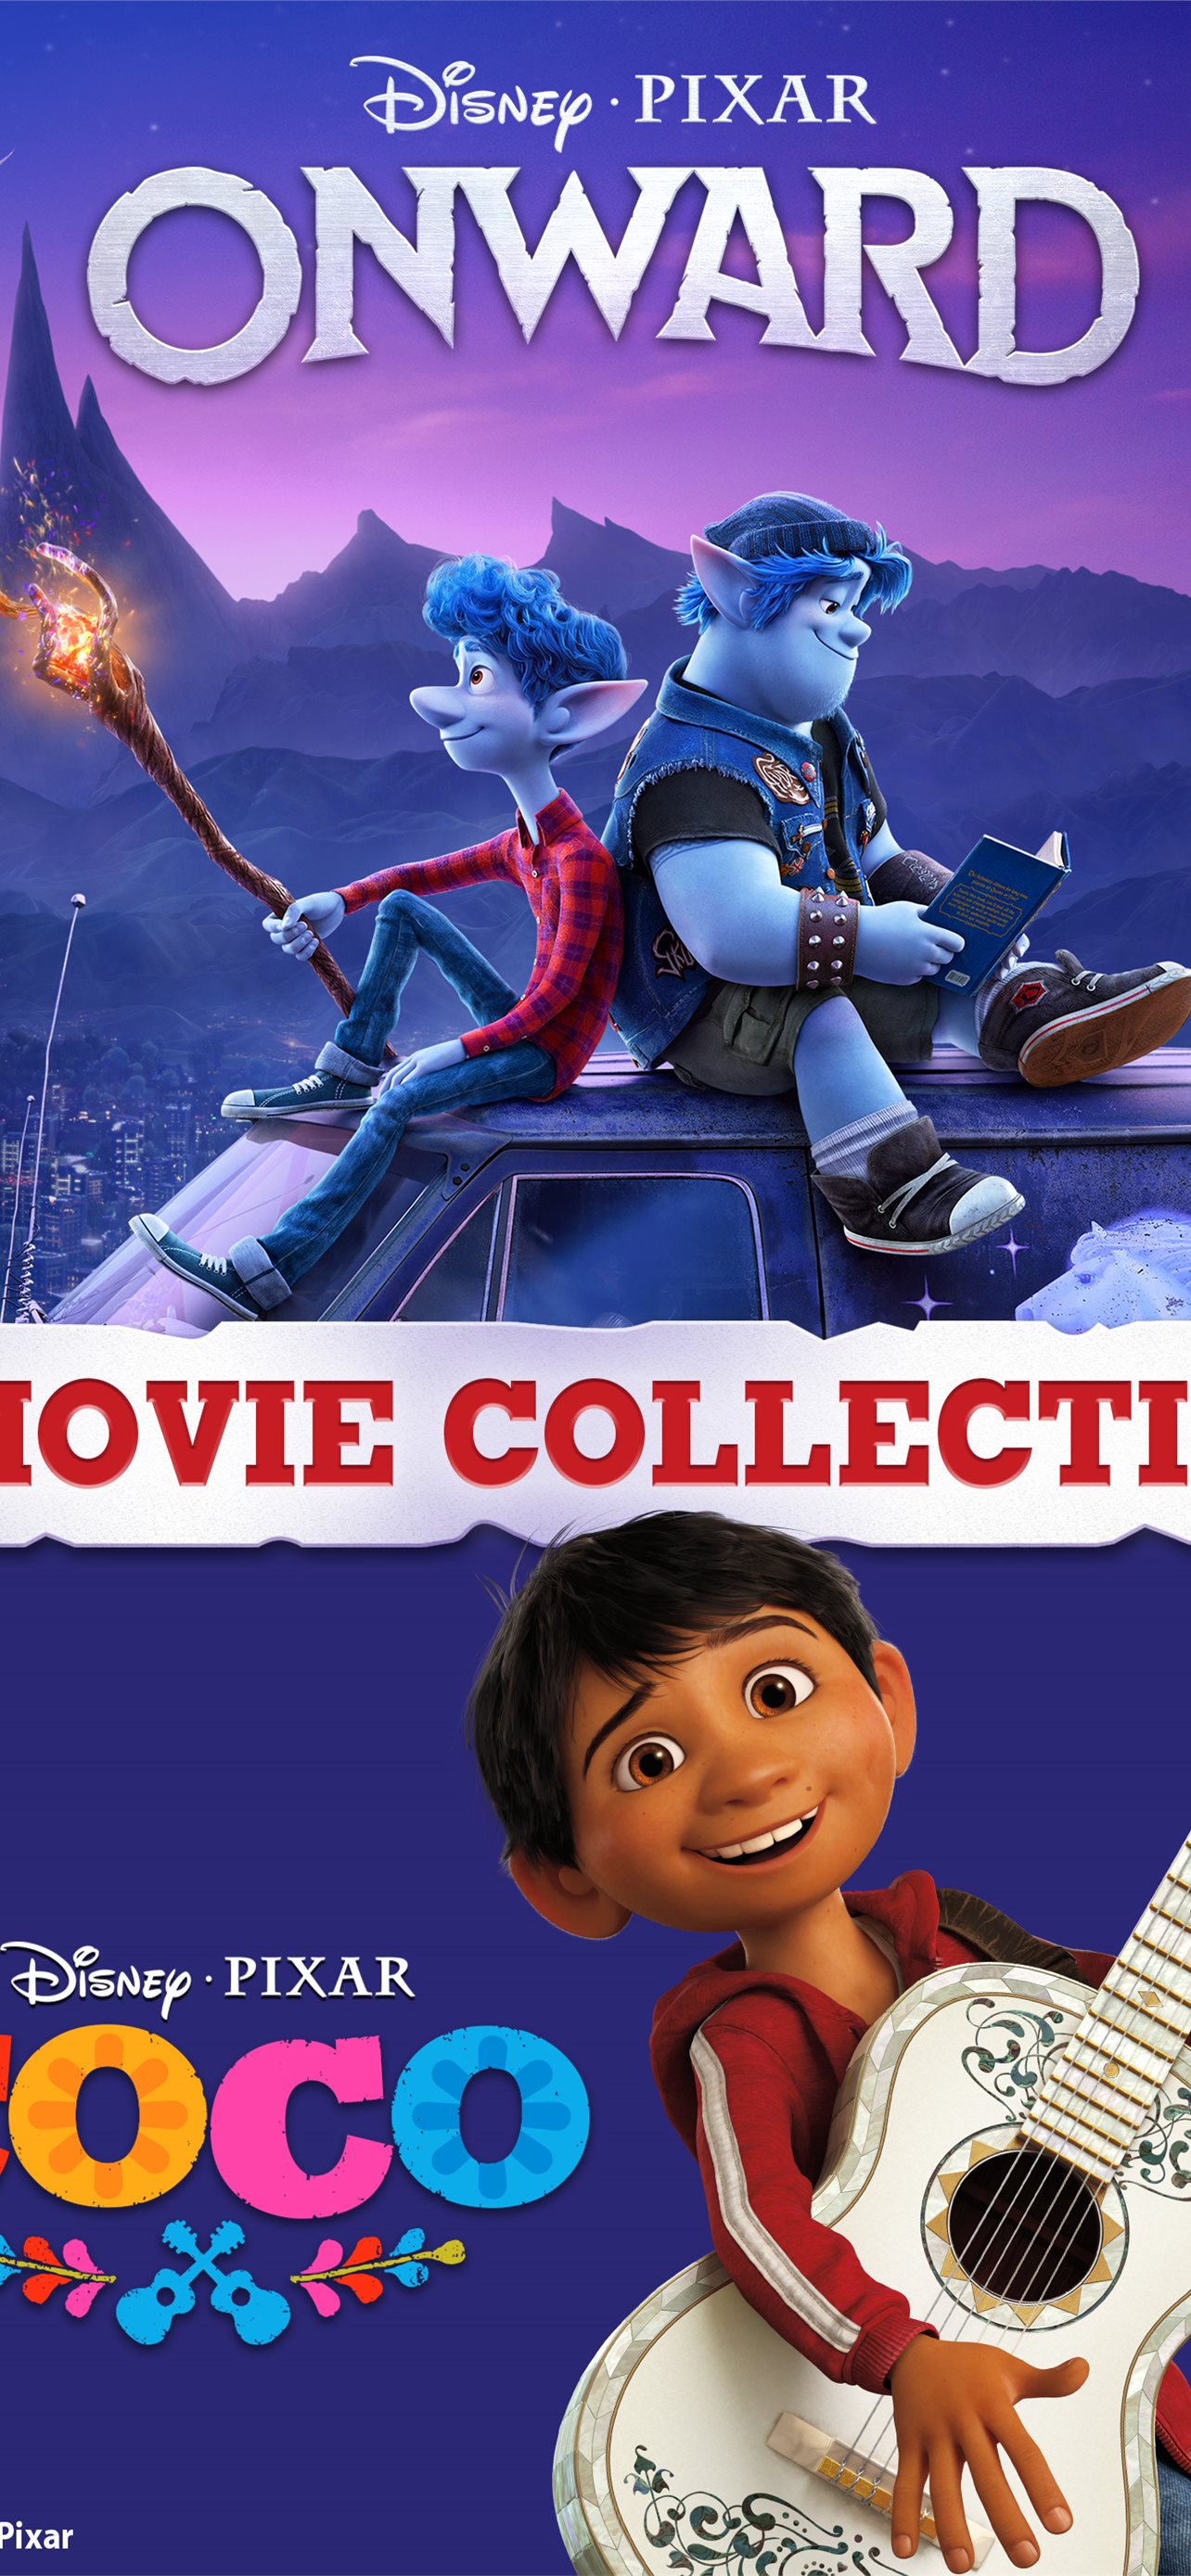 coco pixar iPhone Wallpapers Free Download